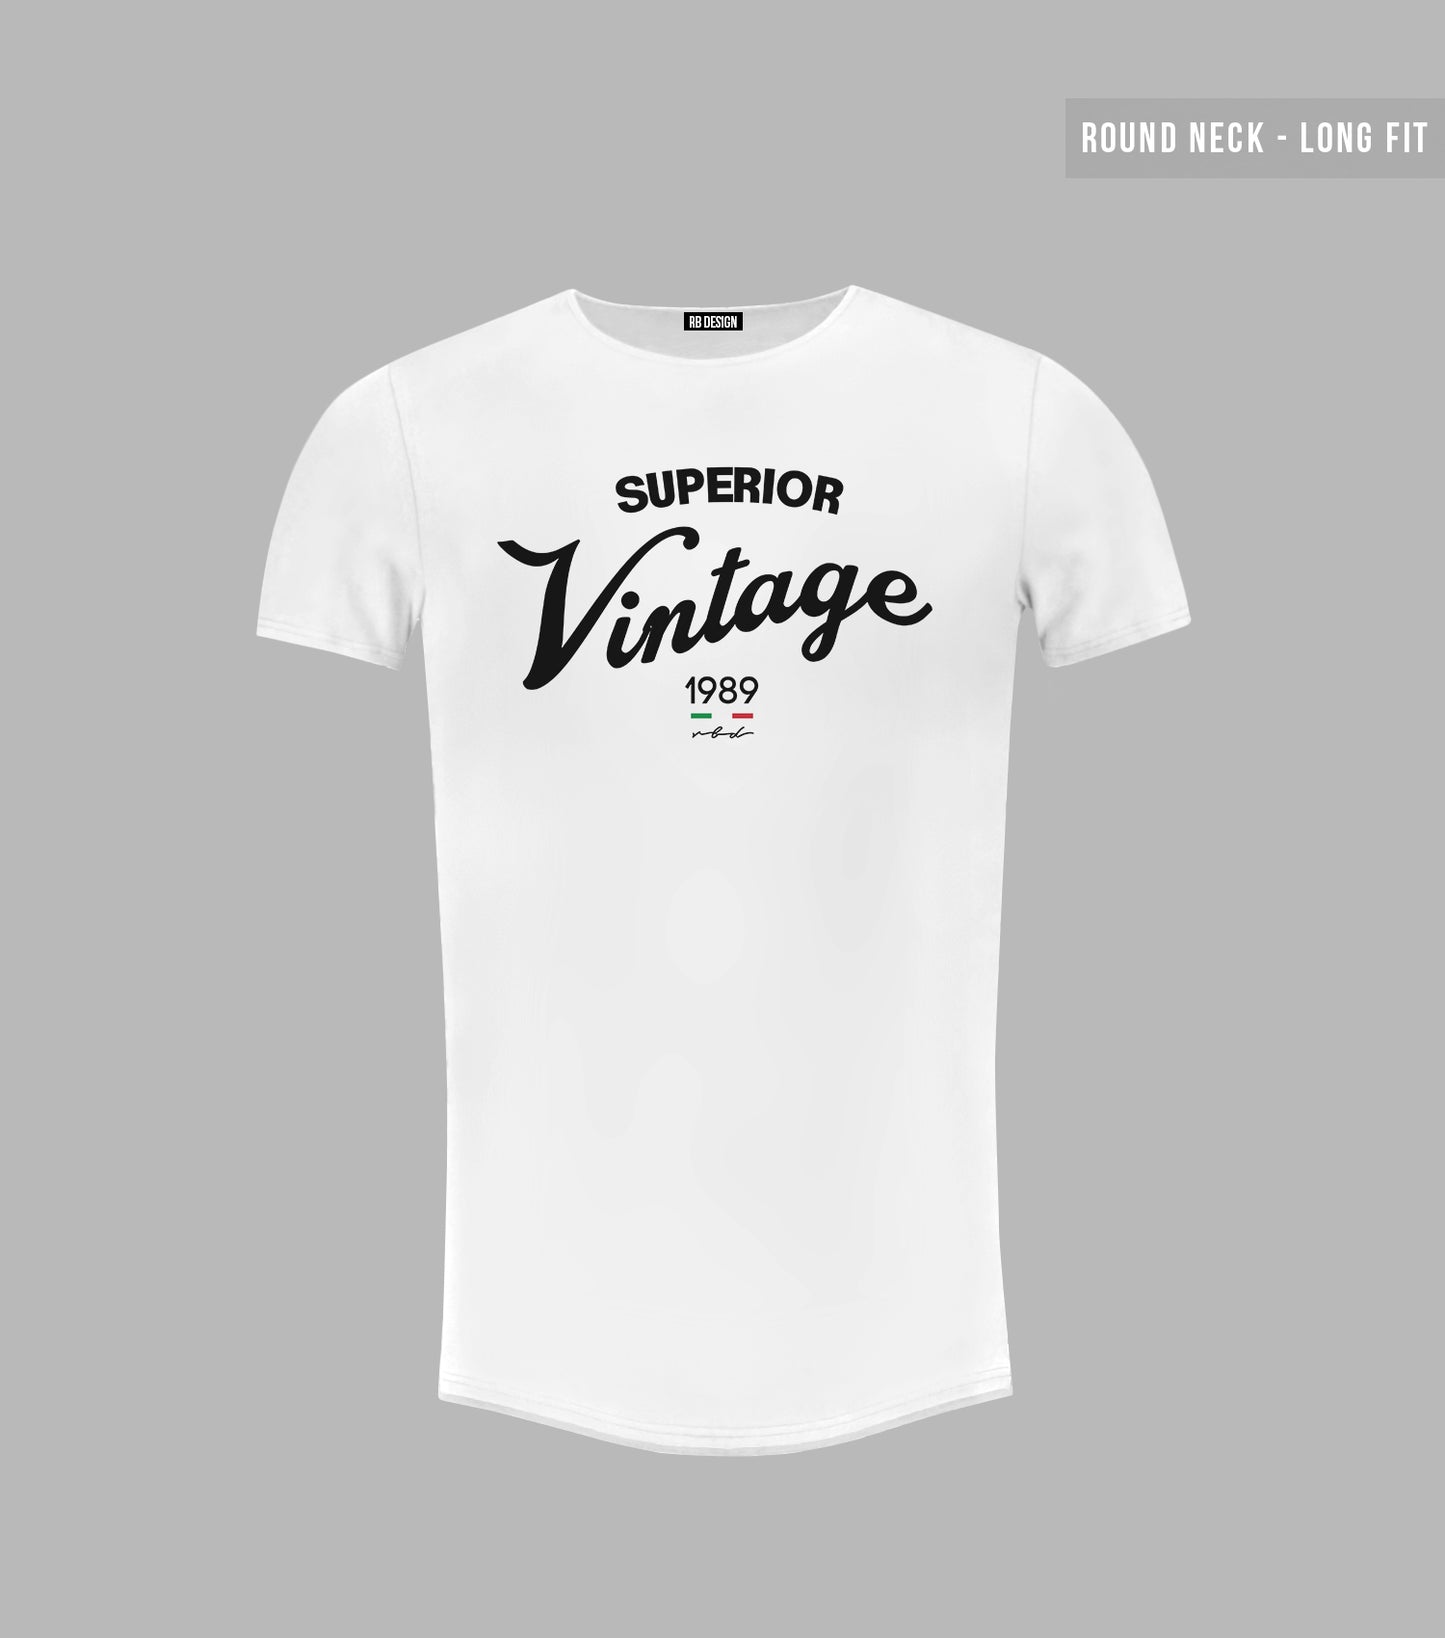 Men's T-shirt "Superior Vintage" Round Neck Long Fit MD934